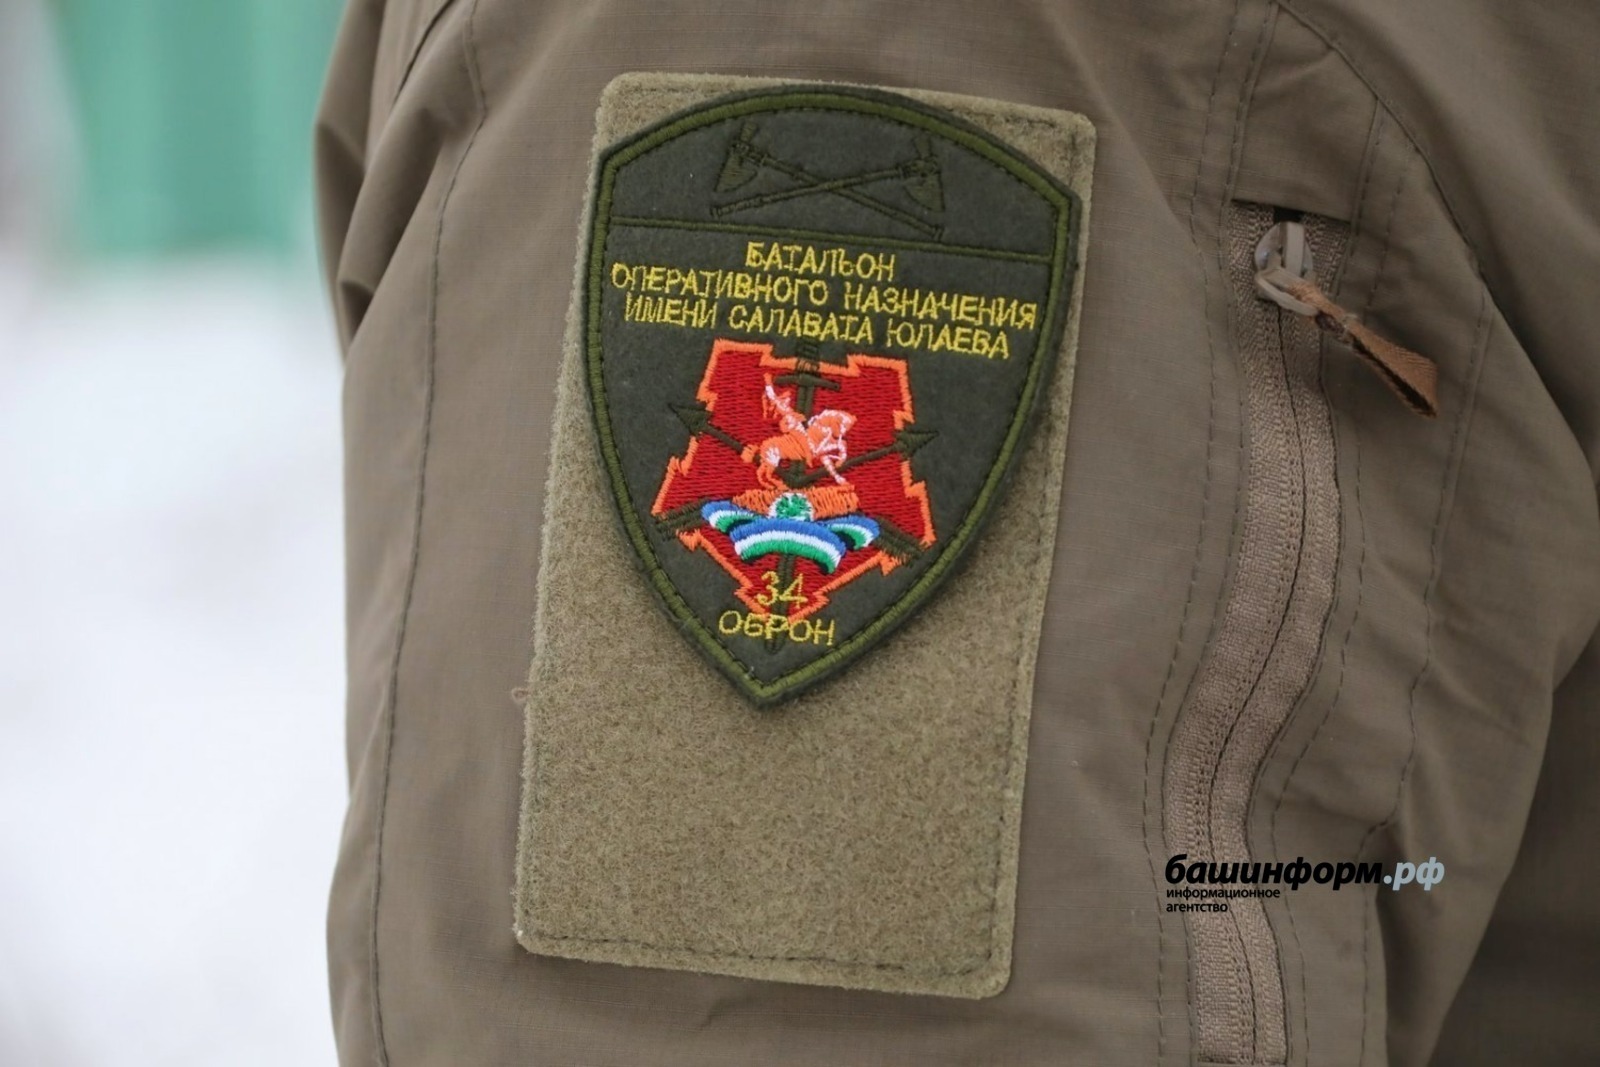 Артур Юмагужин и товарищи заявили о формировании в Башкирии второго батальона имени Салавата Юлаева